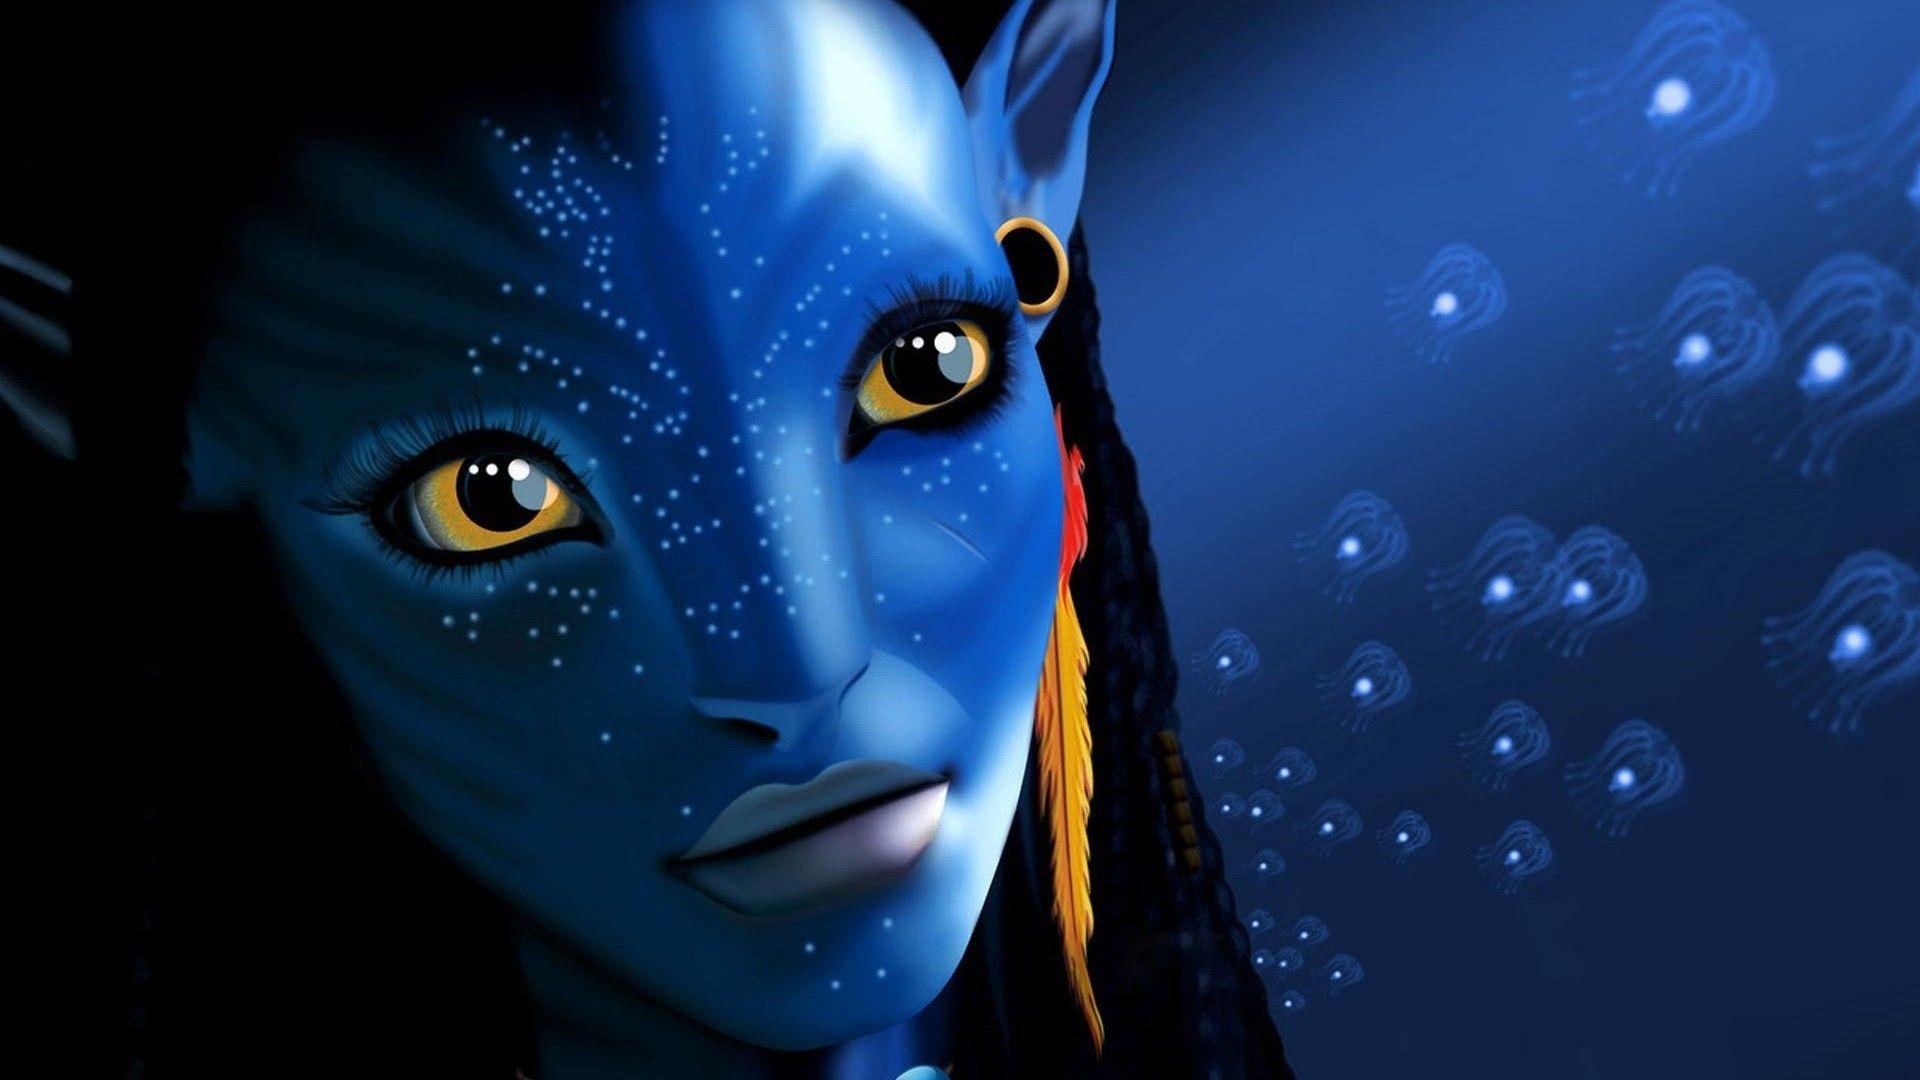 Kiri Avatar The Way of Water Wallpaper 4K HD PC 9150h